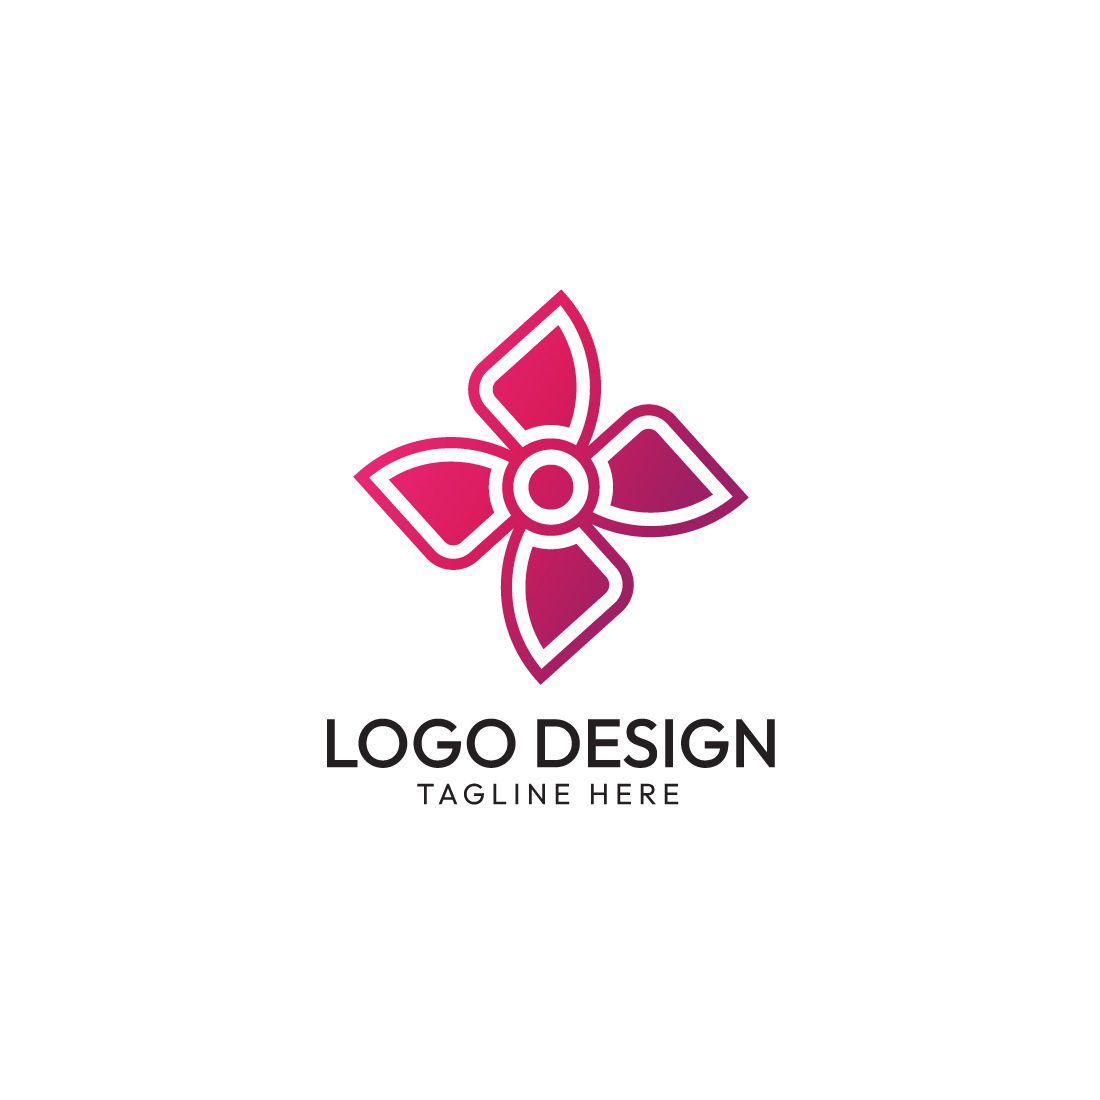 Professional Logo Design Bundles for Your Brand cover image.